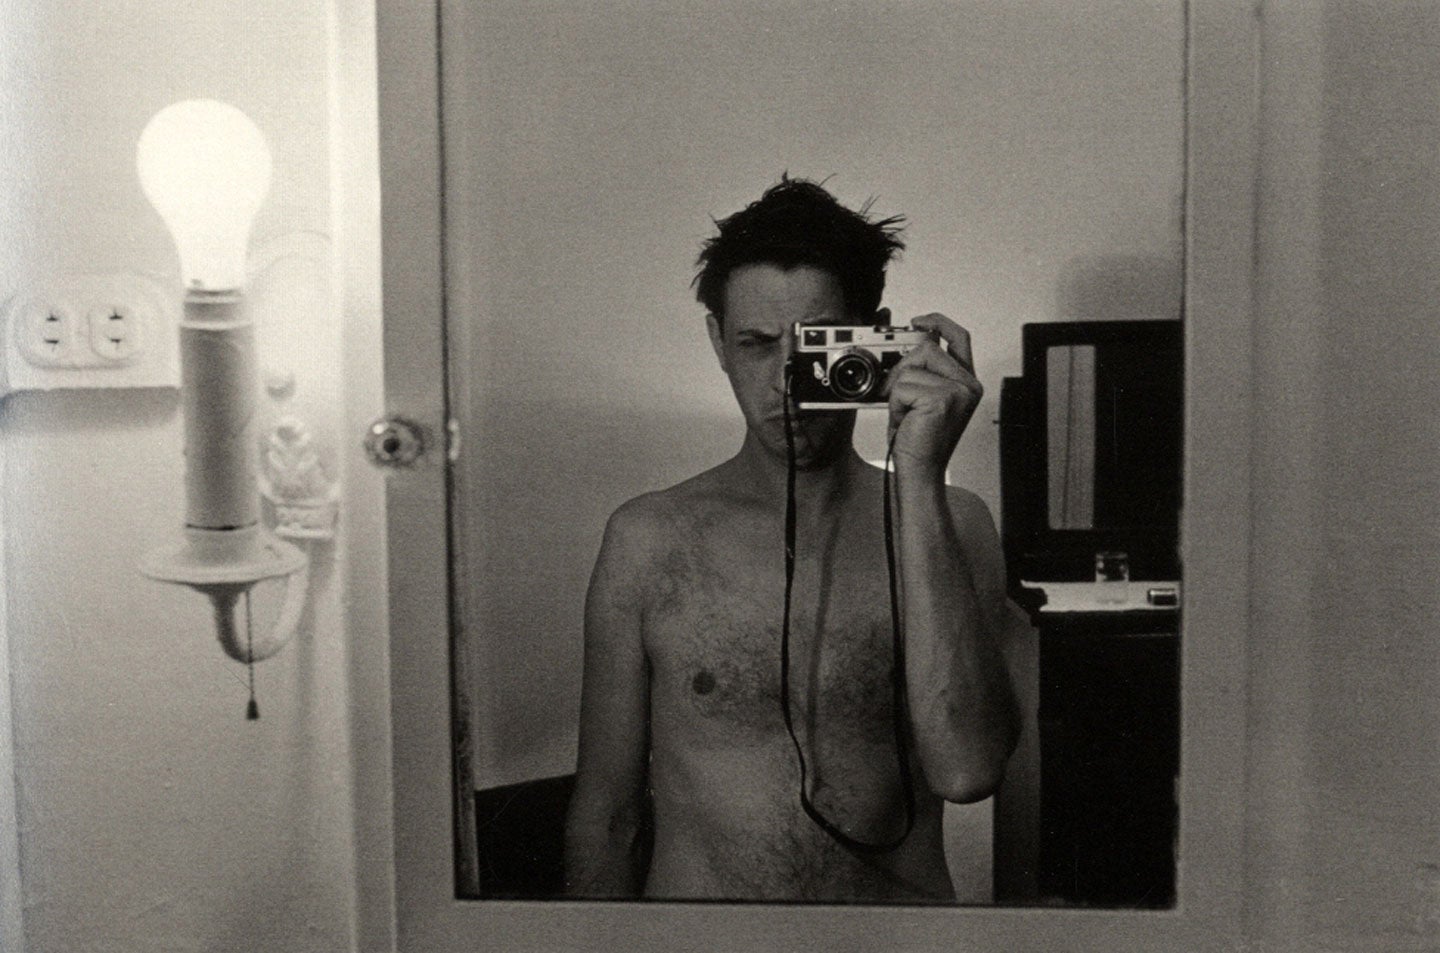 Self Portrait: Photographs by Lee Friedlander (First Edition) [SIGNED]